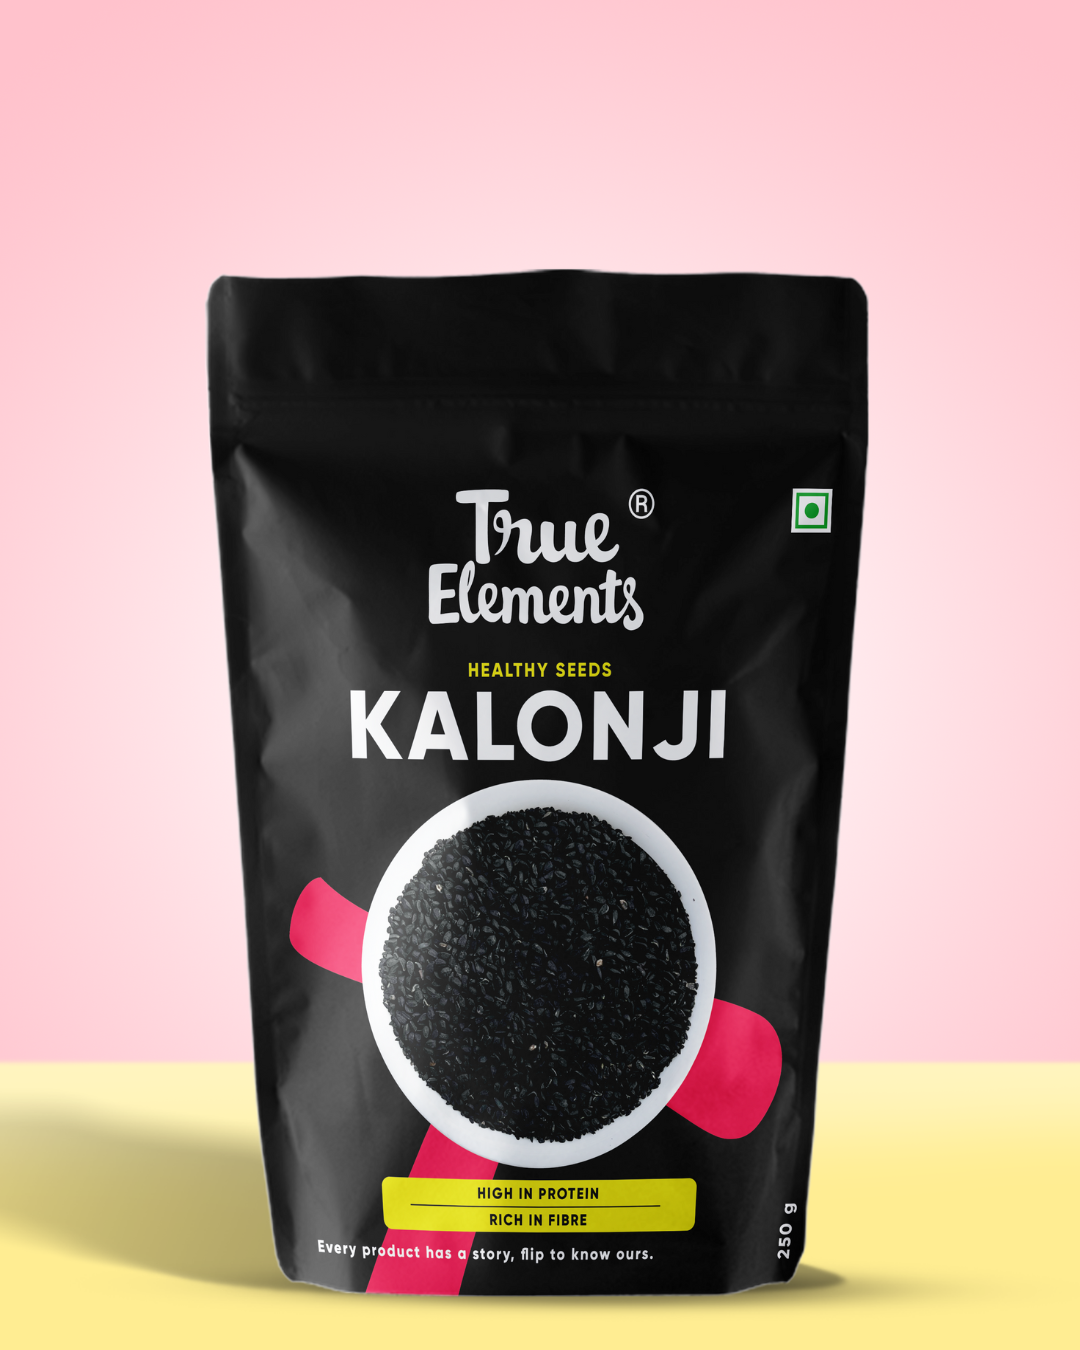 True elements raw kalonji seeds 250g Pouch (Premium Whole Seeds)